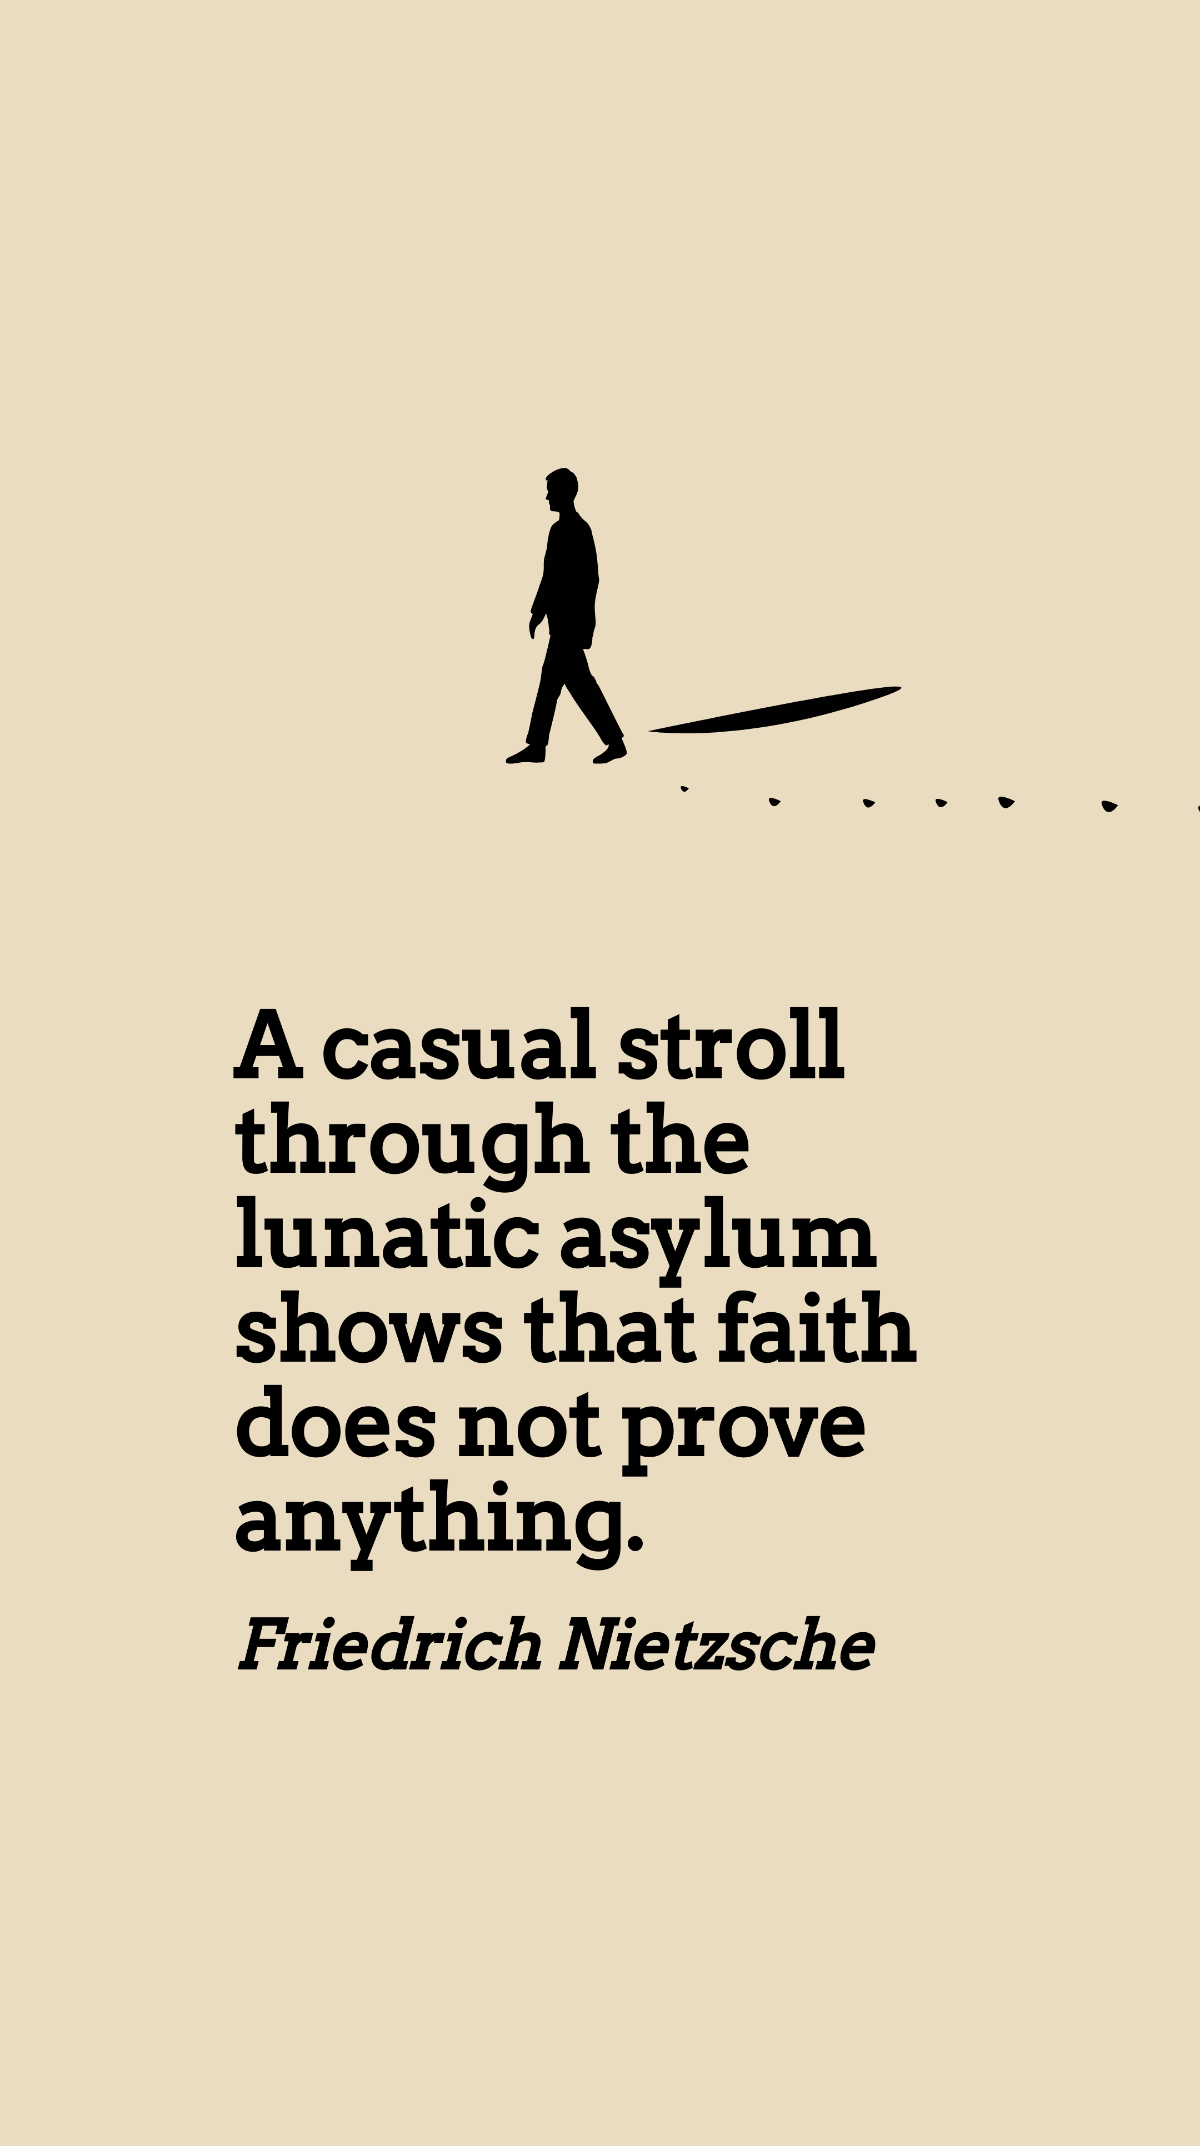 Friedrich Nietzsche - A casual stroll through the lunatic asylum shows that faith does not prove anything. Template